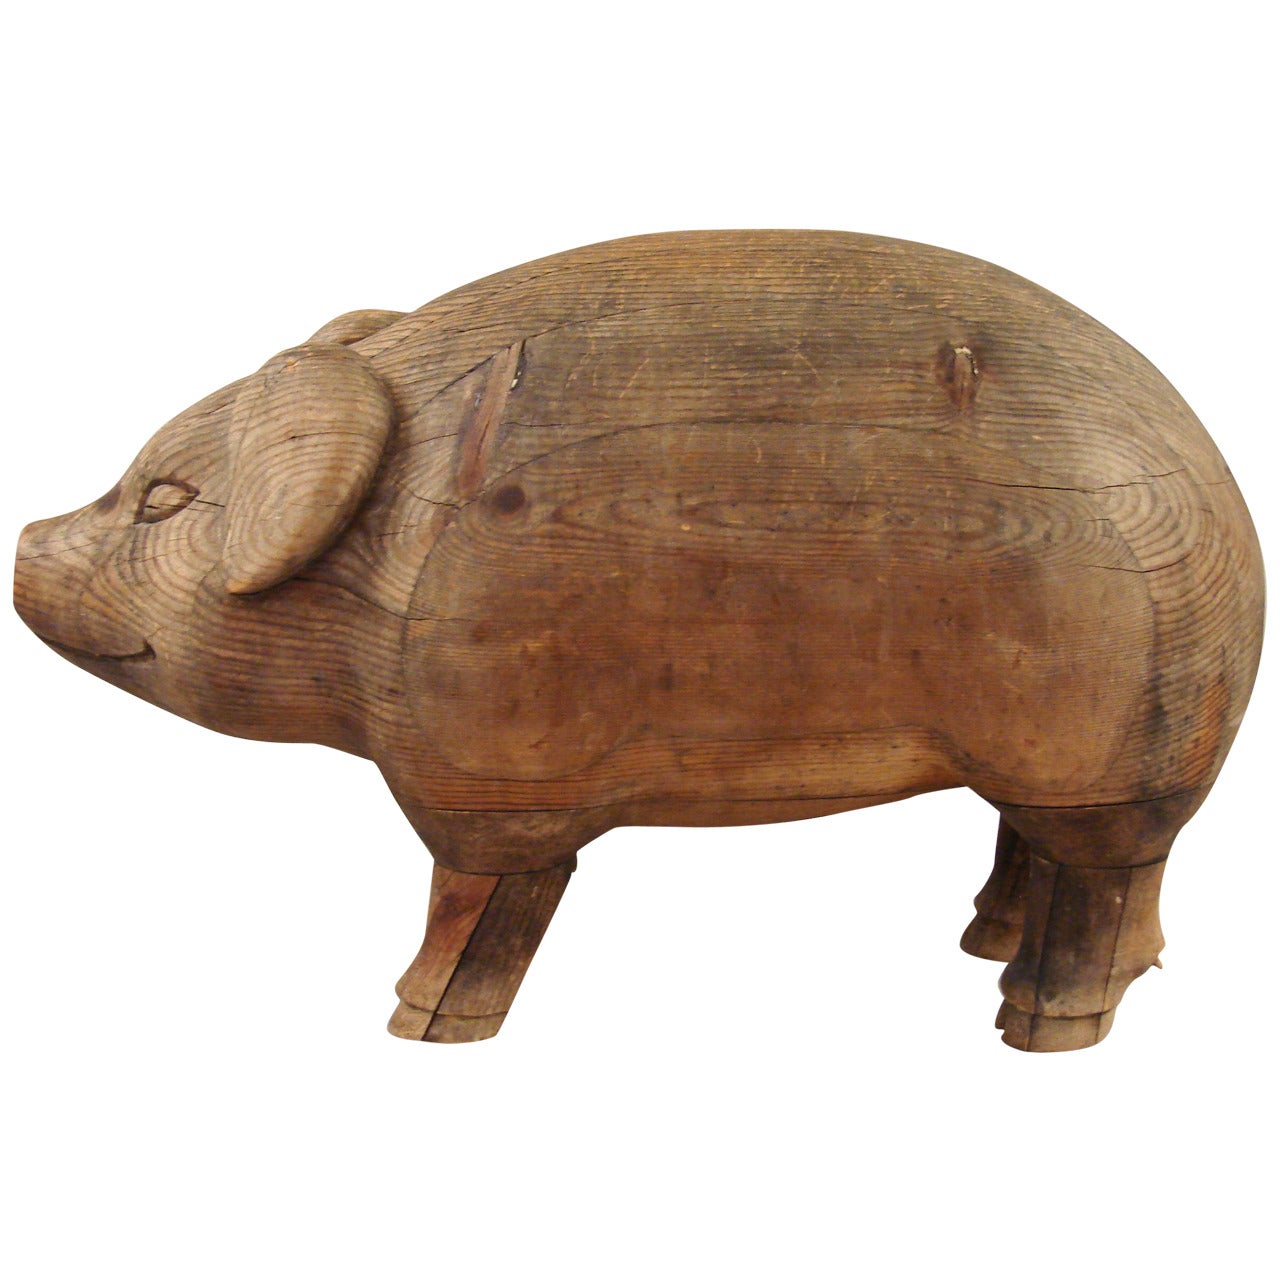 Laminated Wooden Pig